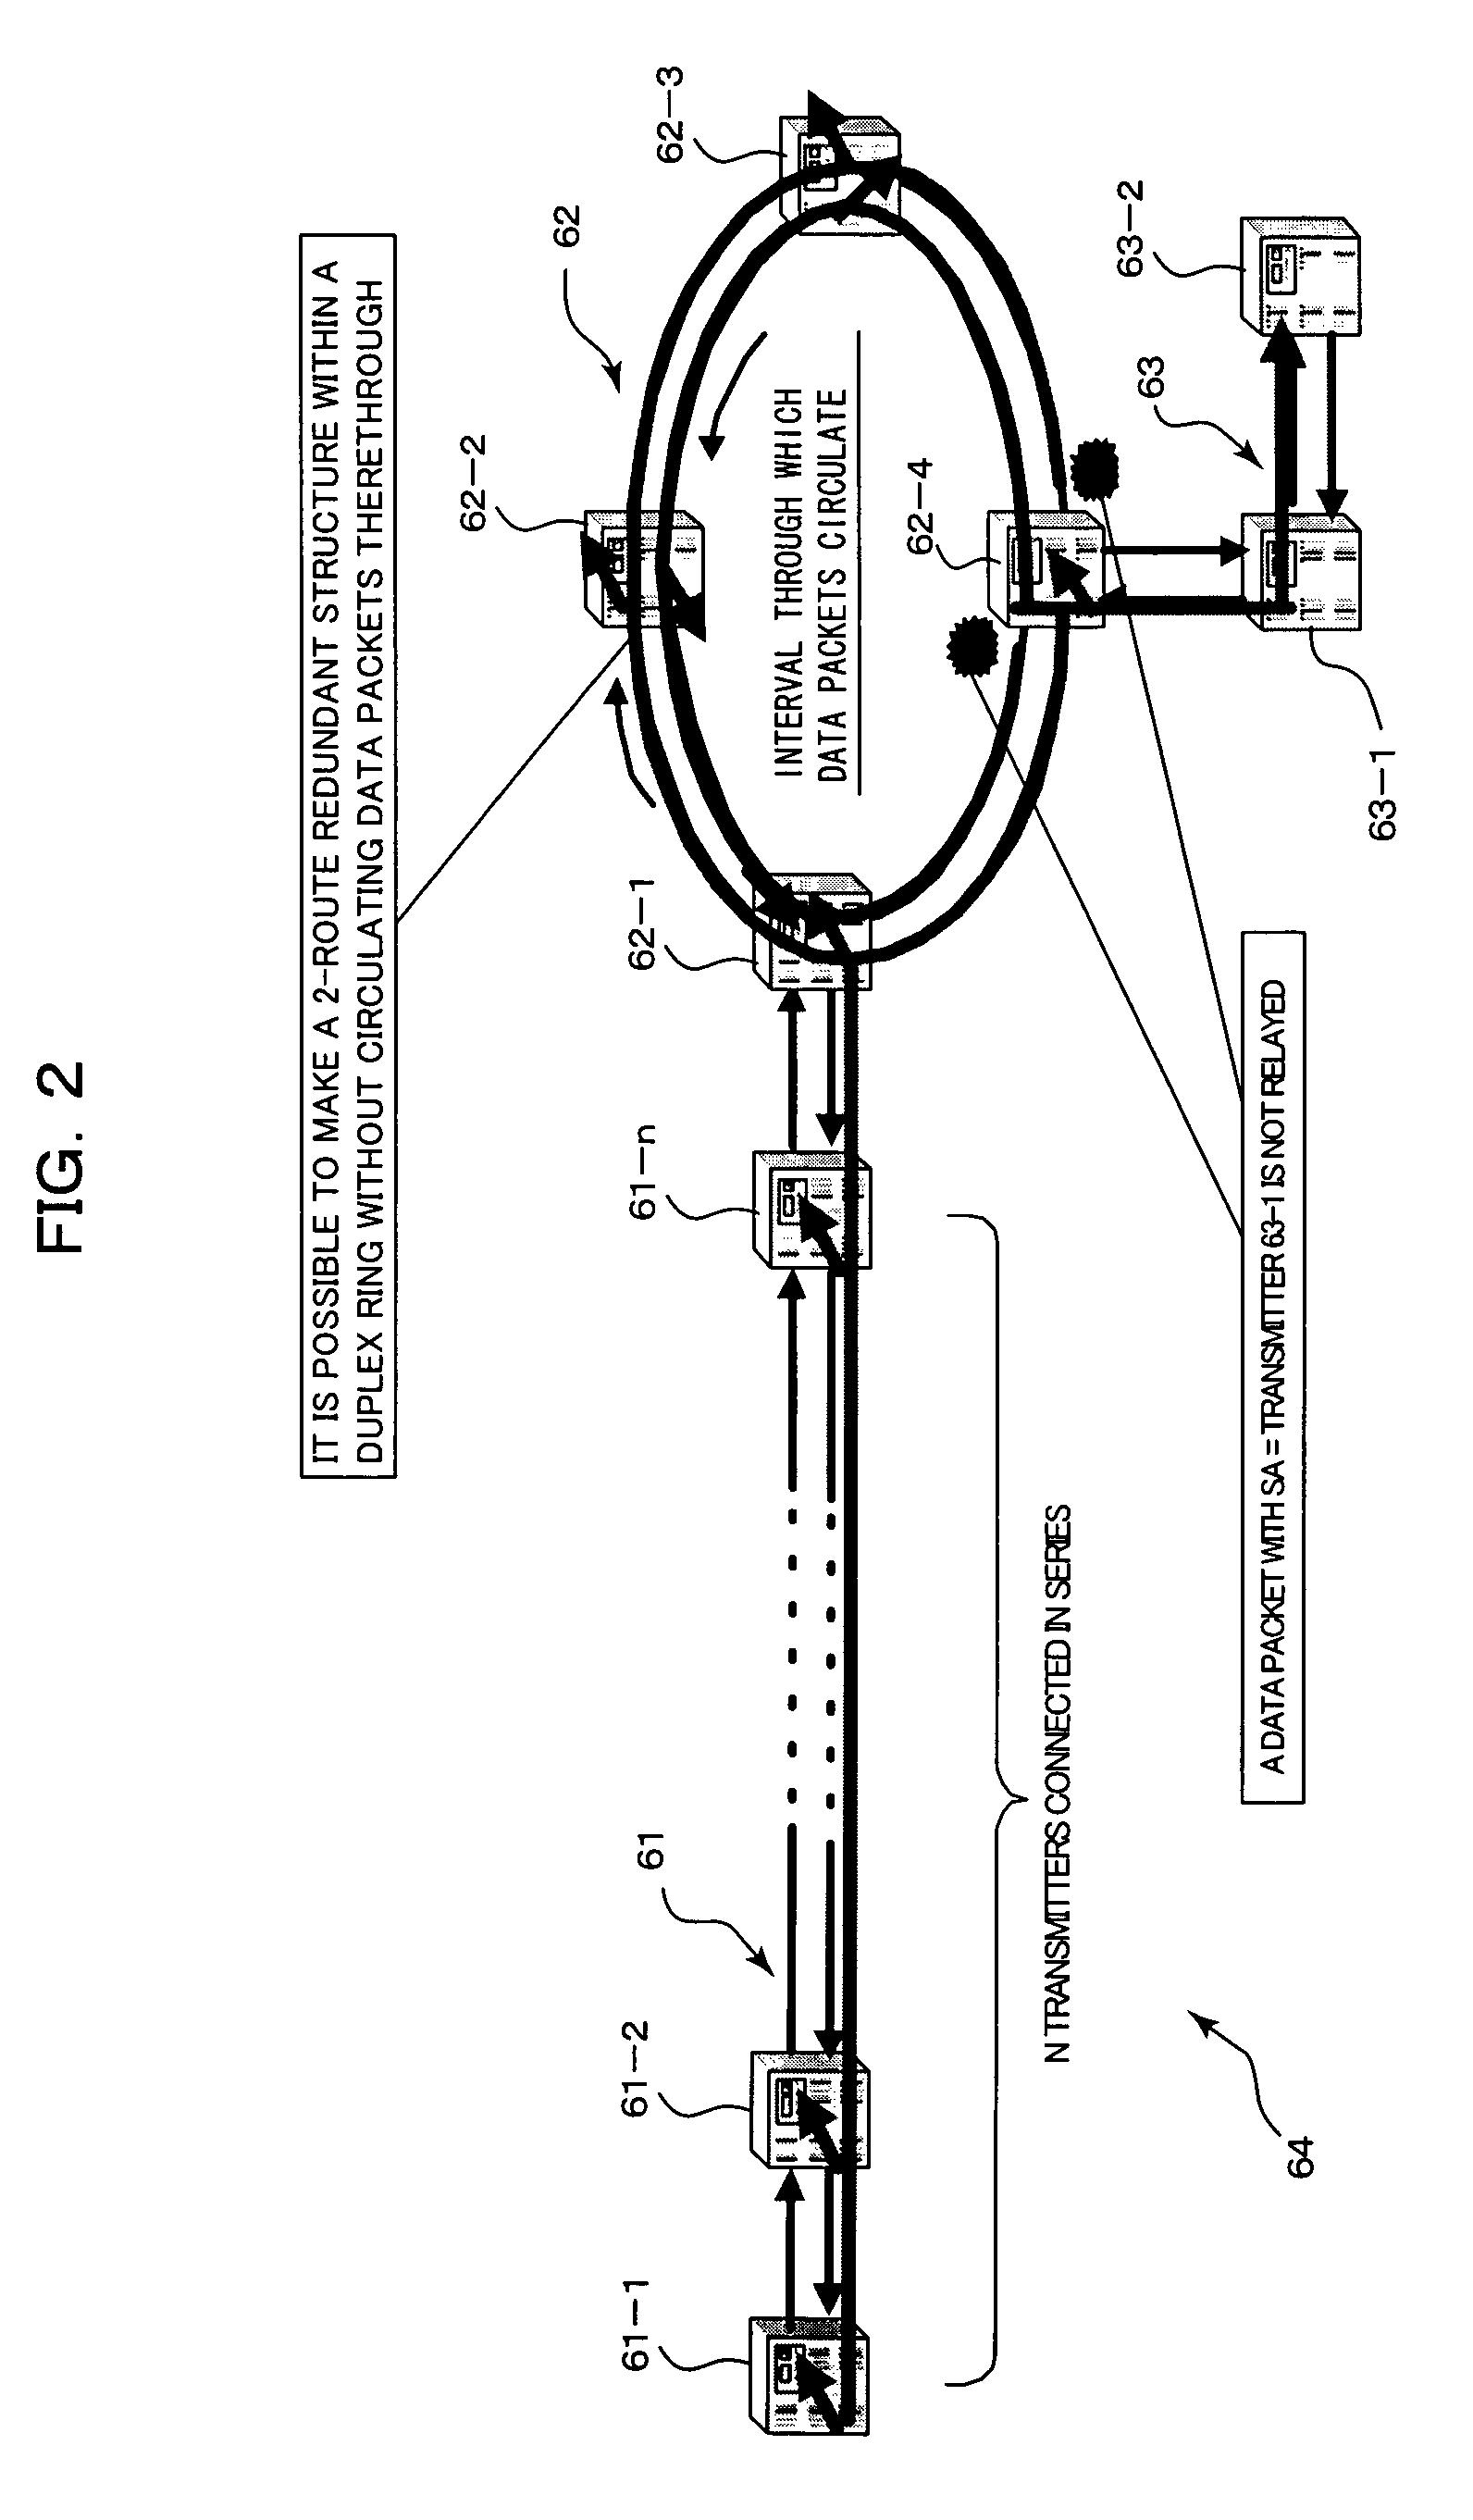 Transmitter and method of transmission